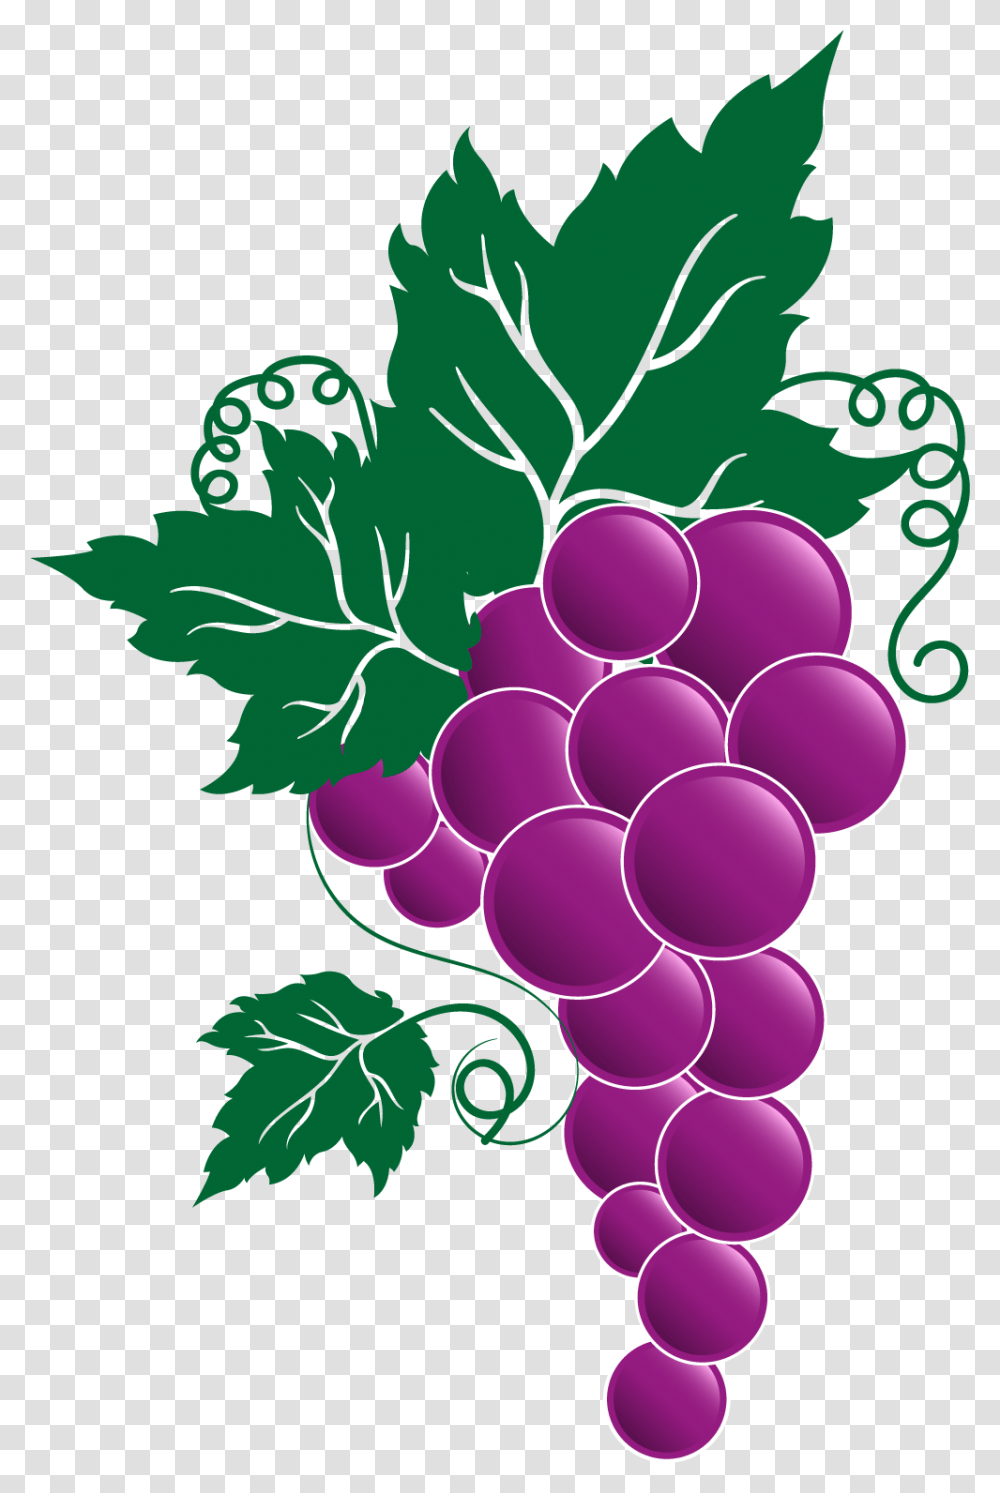 Grape Free Images Grapes On The Vine Clipart, Fruit, Plant, Food Transparent Png